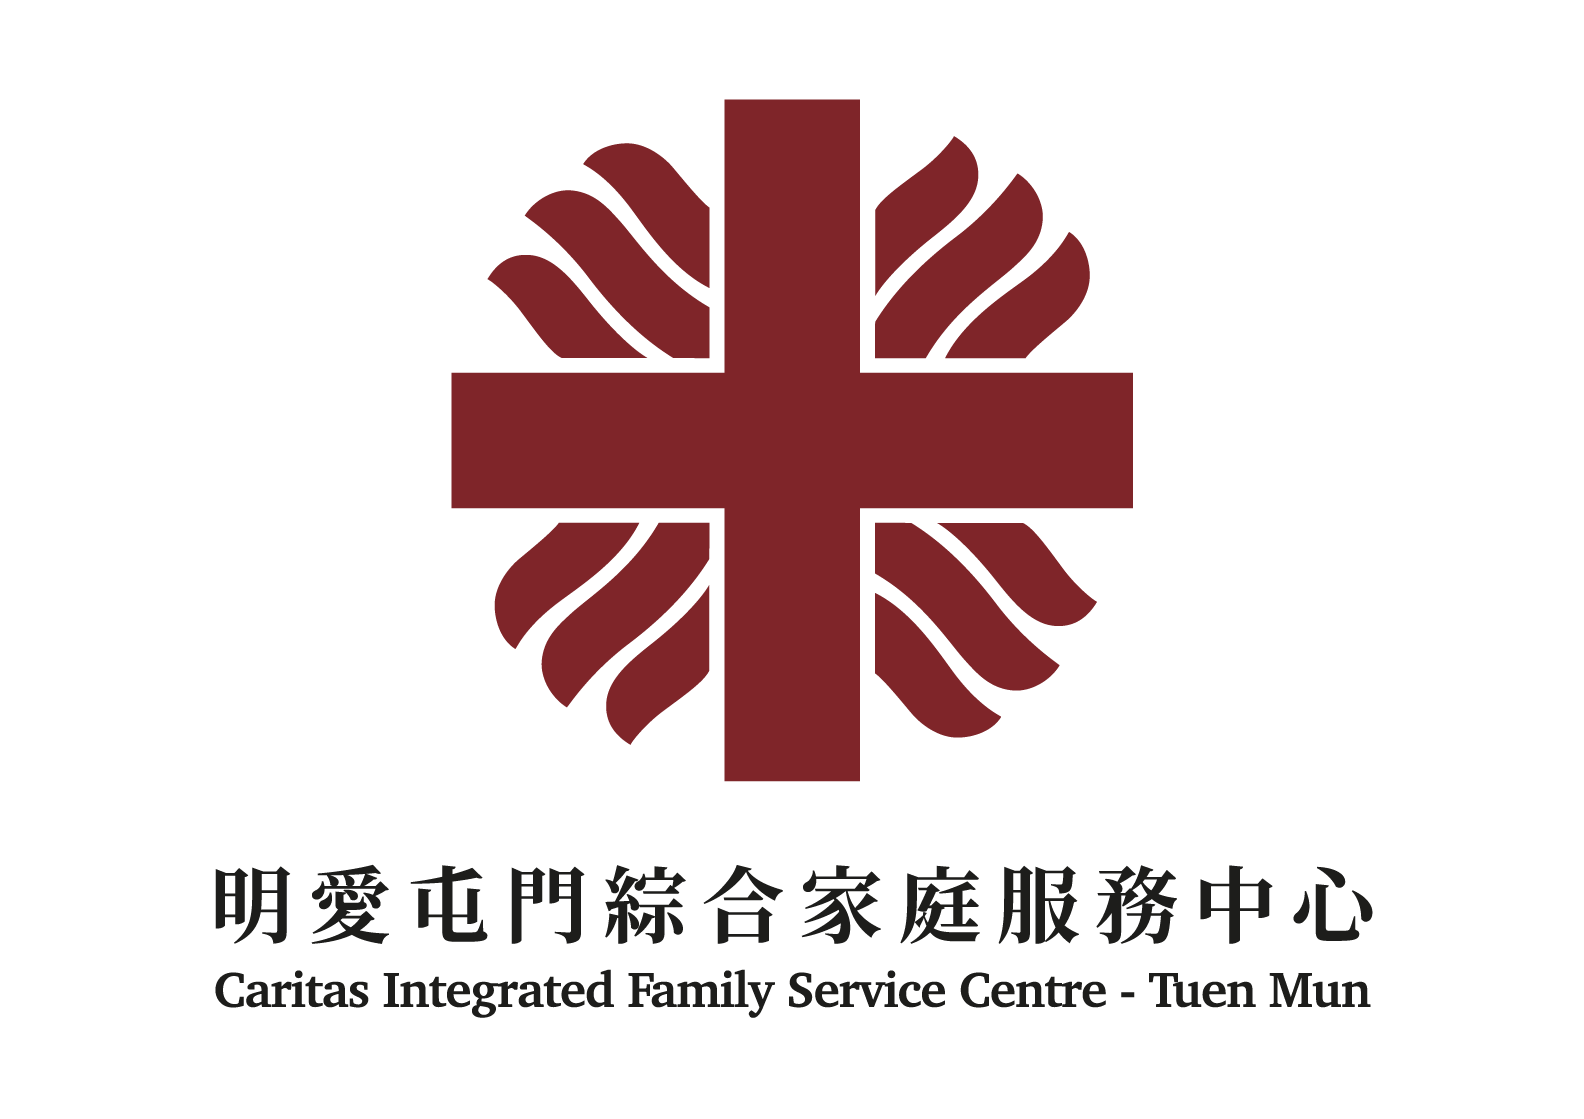 Caritas - Hong Kong